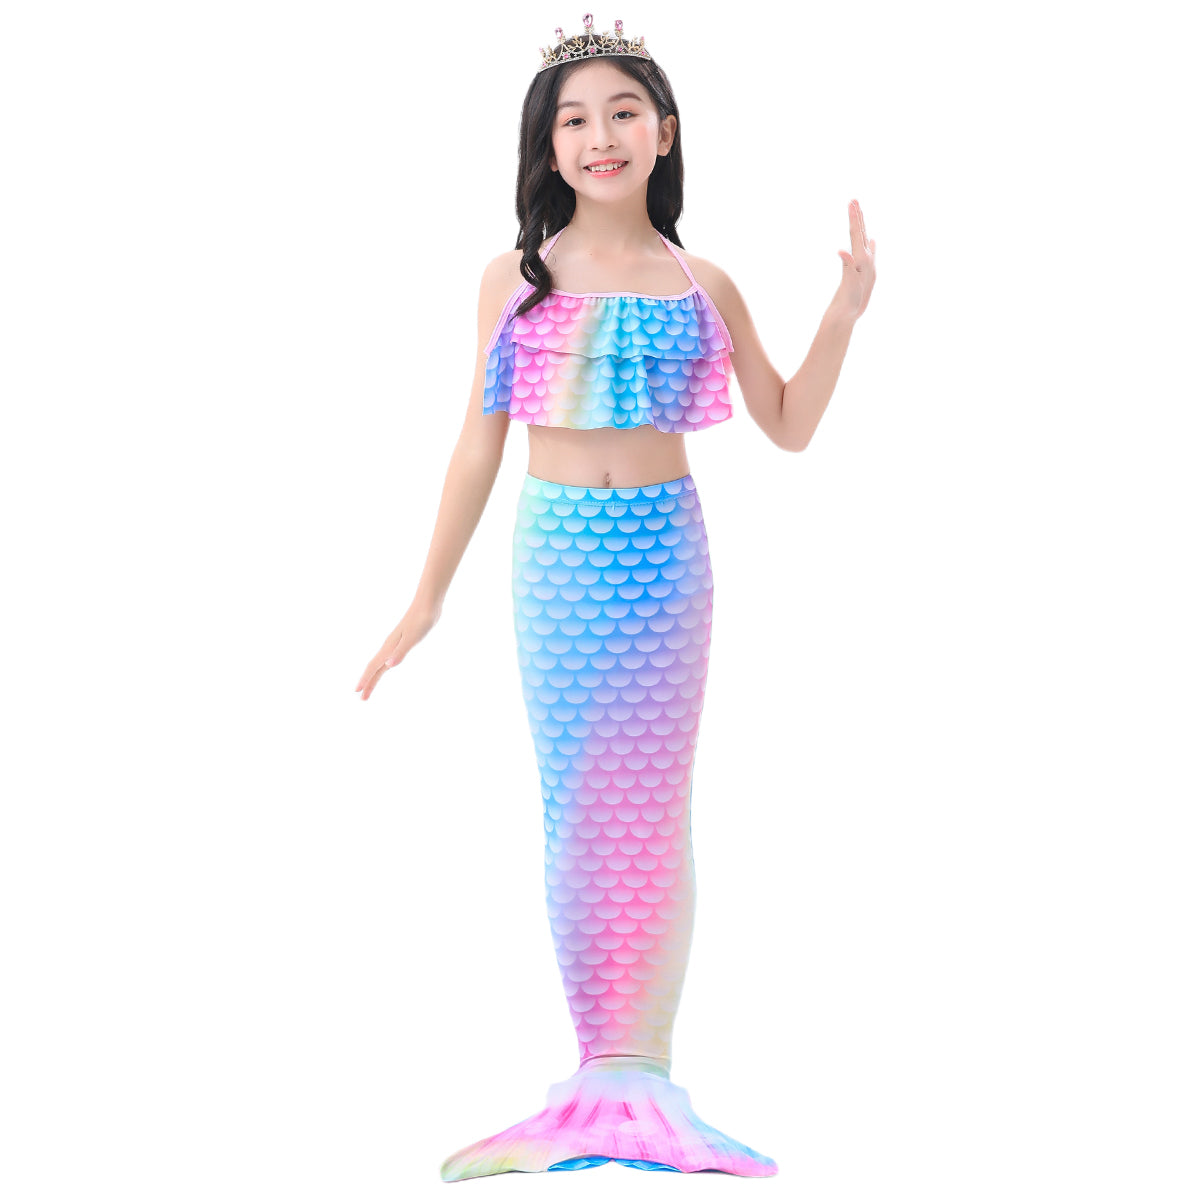 HOLOUN Mermaid Princess Cosplay Costume Kids Girls Children Dress Swimsuit Bikini For Carnival Birthday Party Clothes Gift 3PCS Set A1